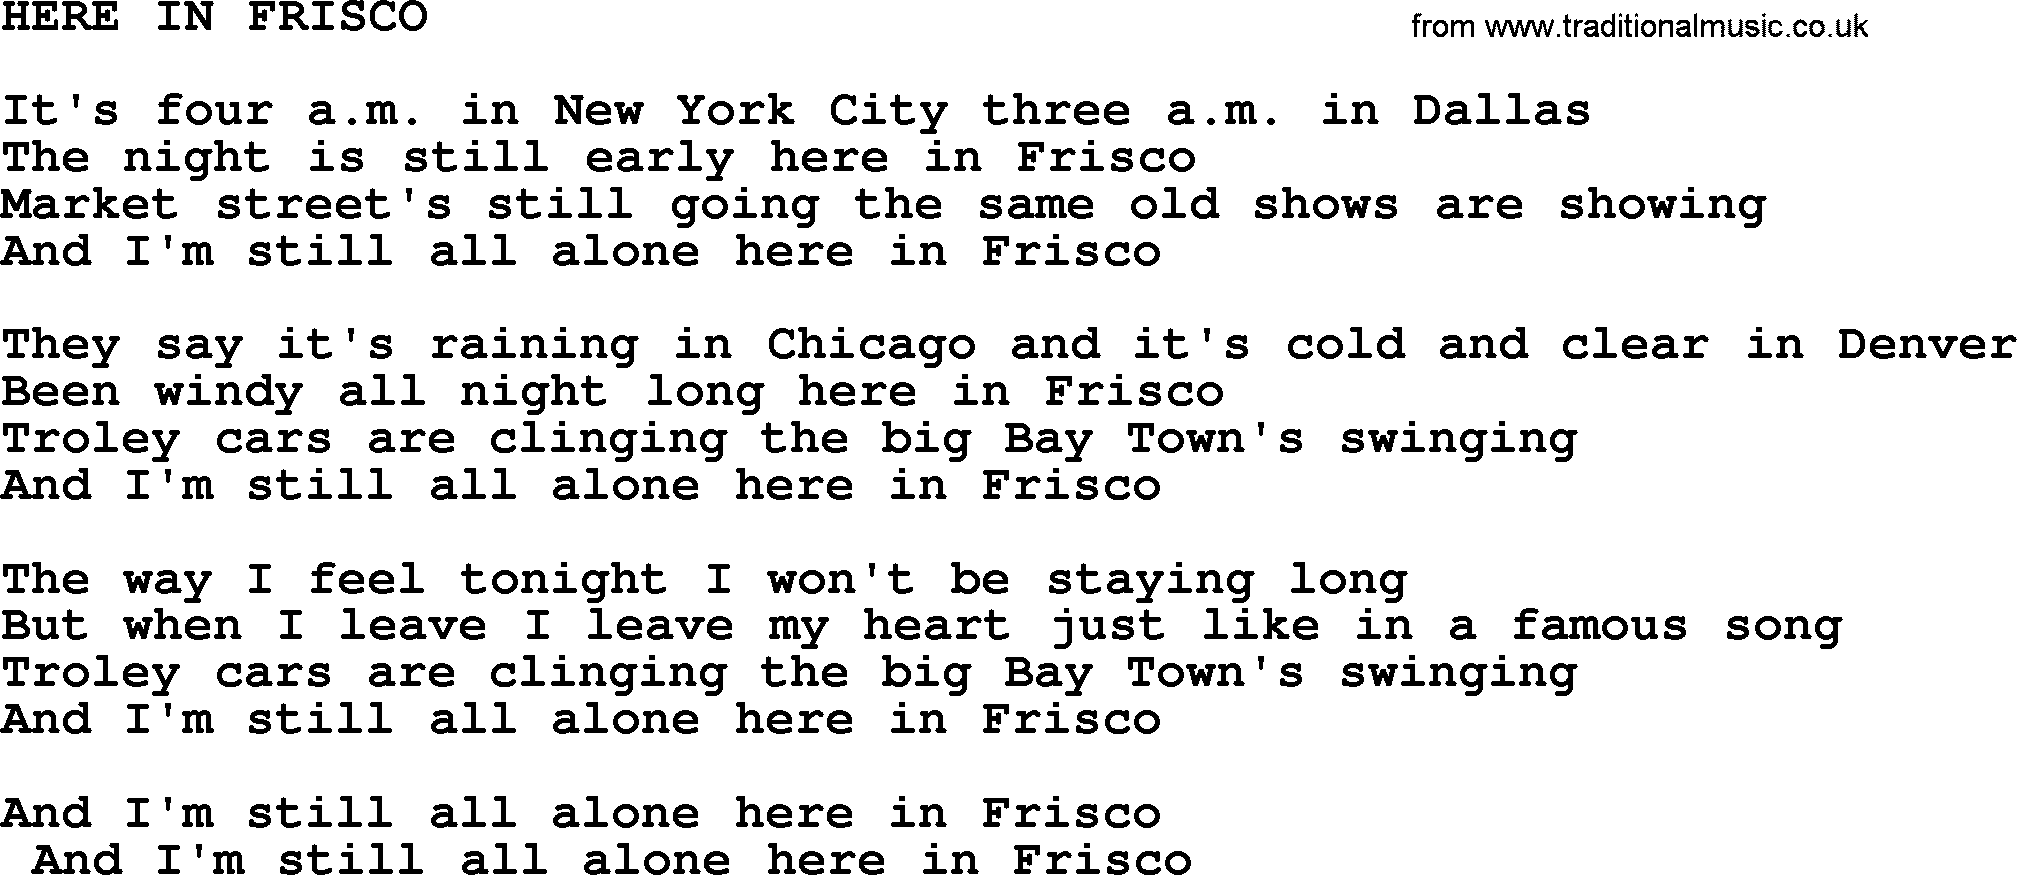 Merle Haggard song: Here In Frisco, lyrics.